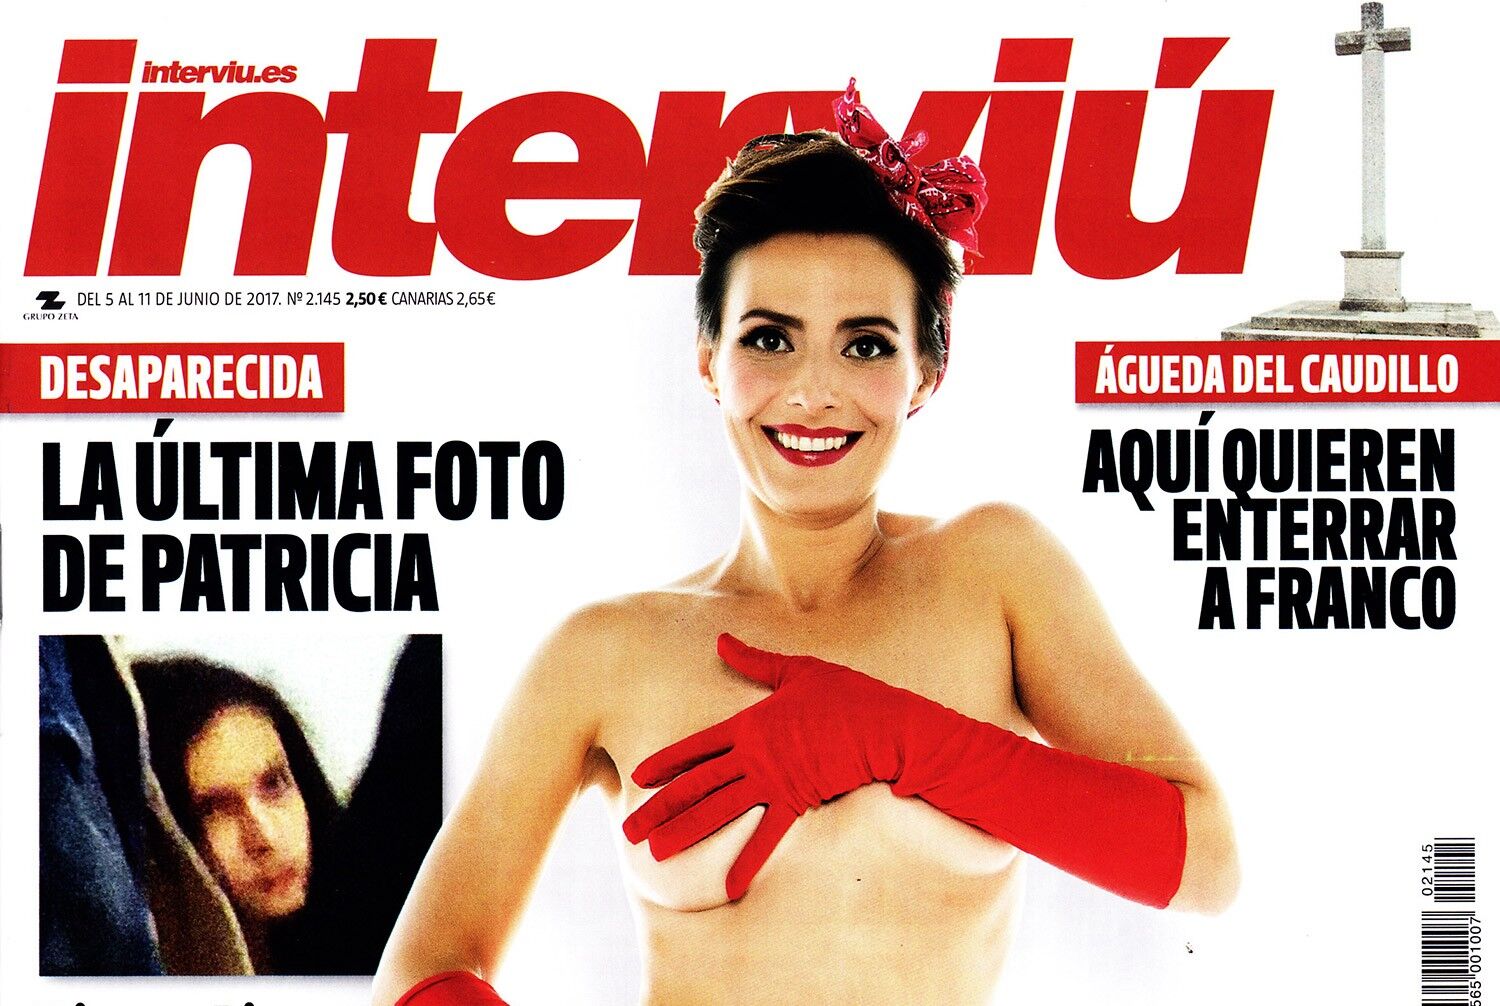 La espartana deprimida de Pablo Iglesias, portada de 'Interviú' - Libertad  Digital